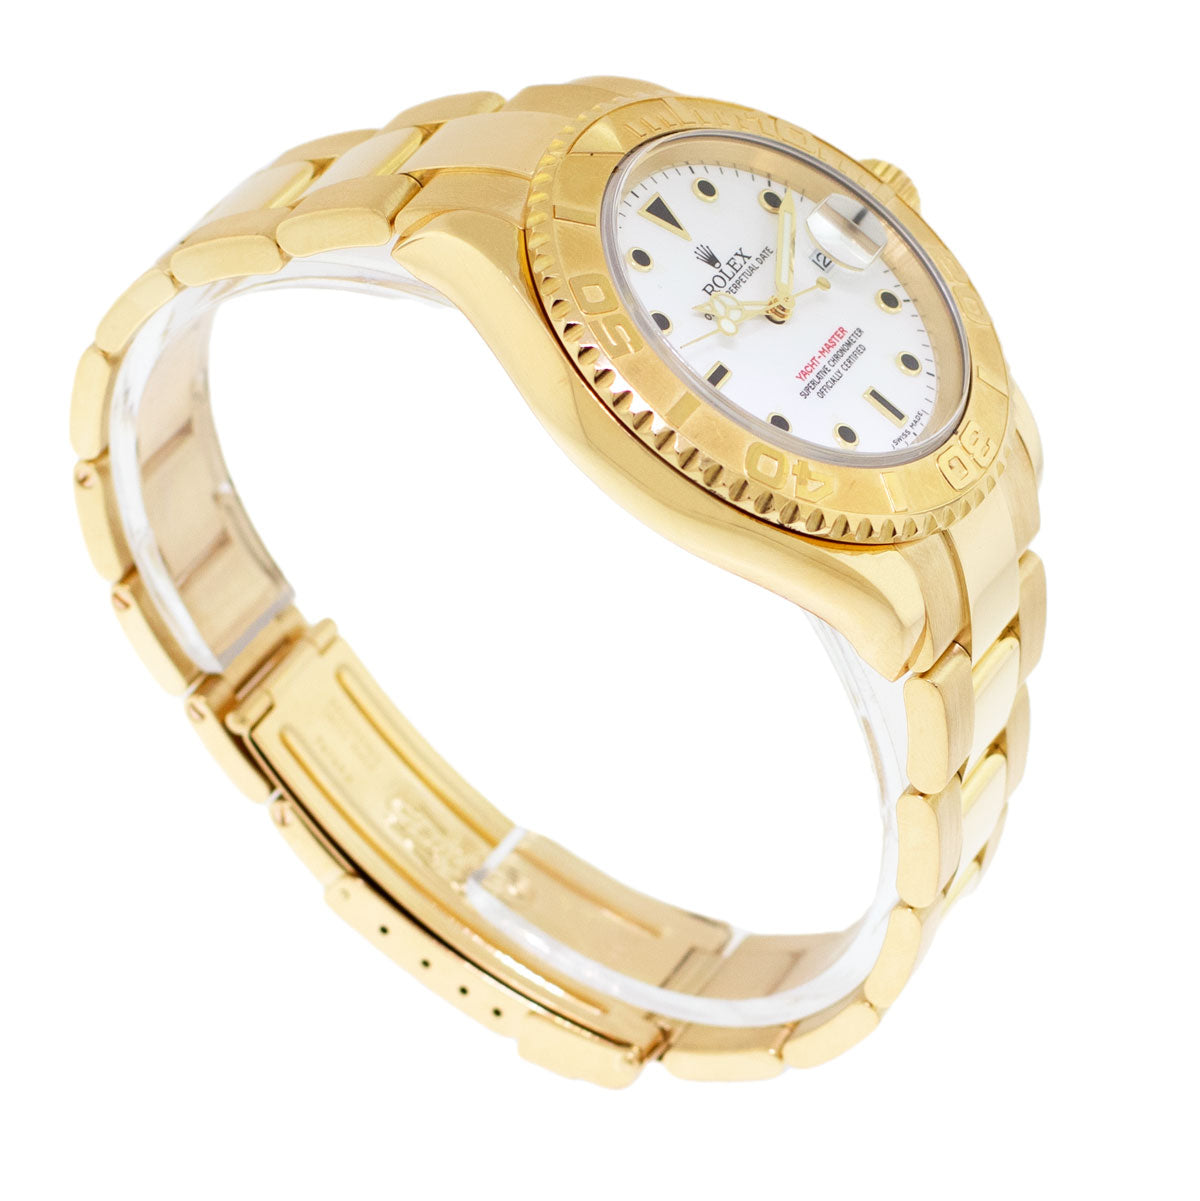 Rolex Yacht-Master Blue 16628 Yellow Gold Watch 40mm - Luxury Watches USA